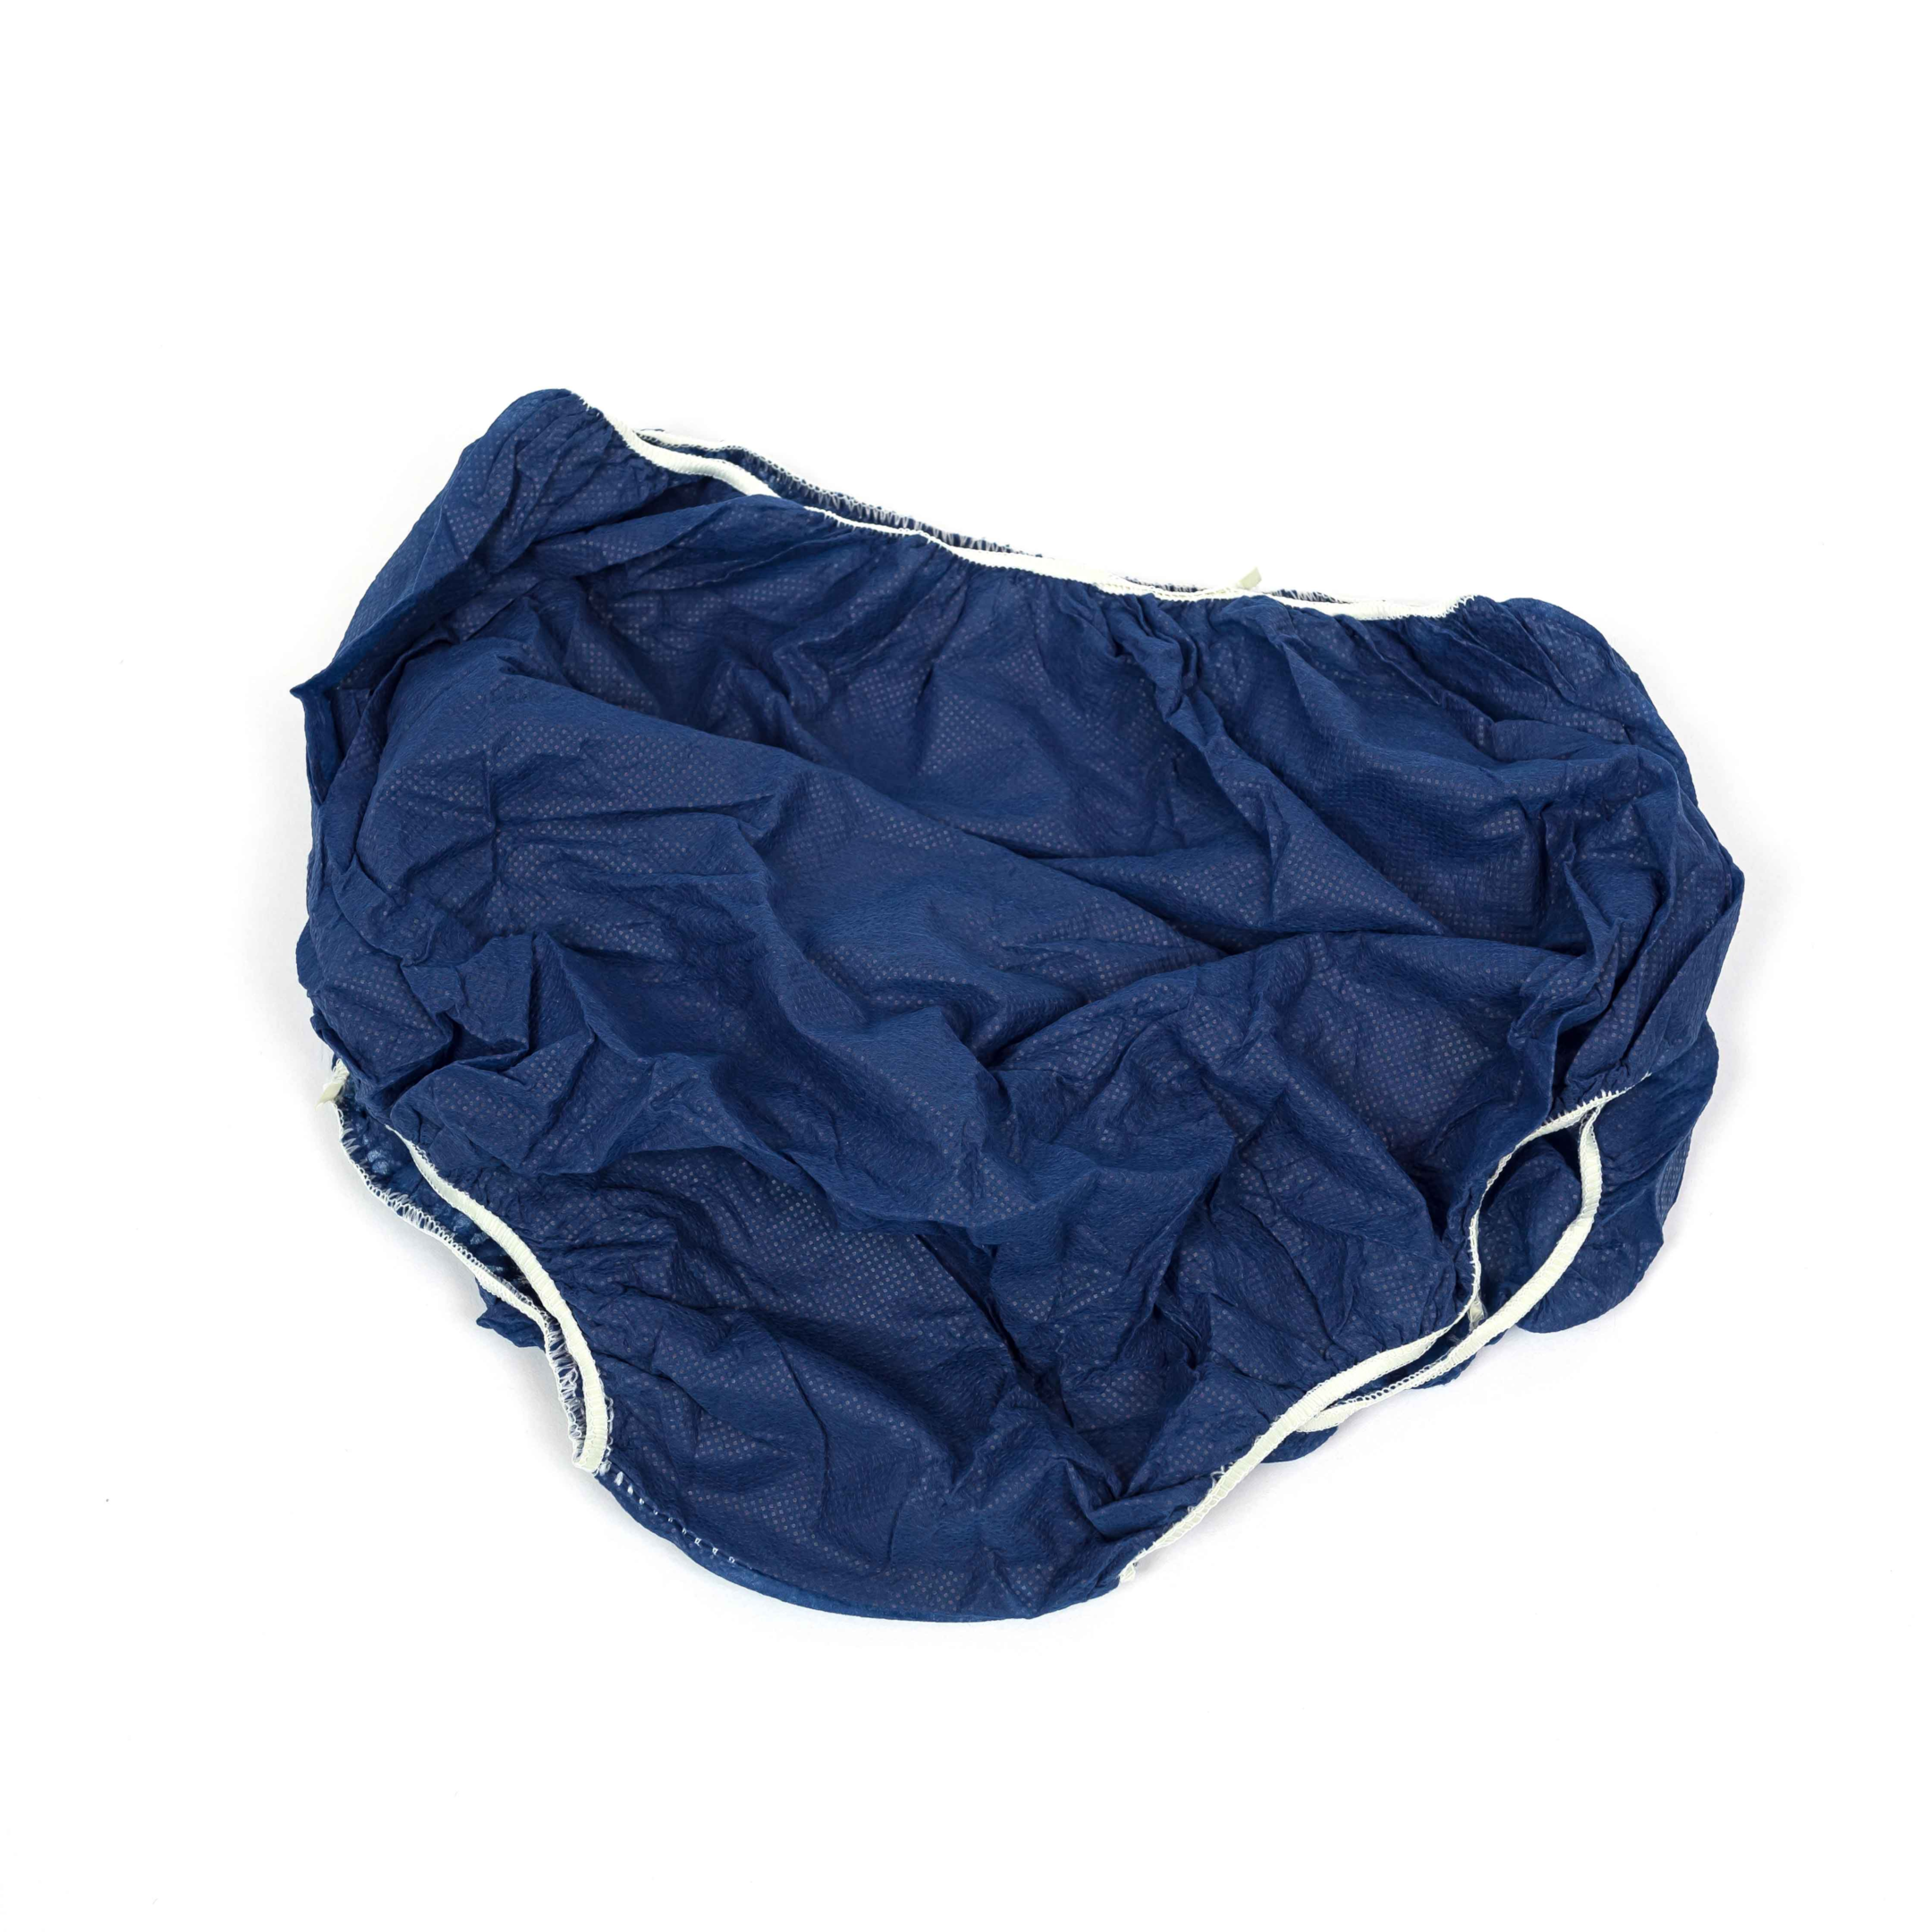 Wholesale Disposable Spa Panties: Comfort meets Hygiene - YouFu